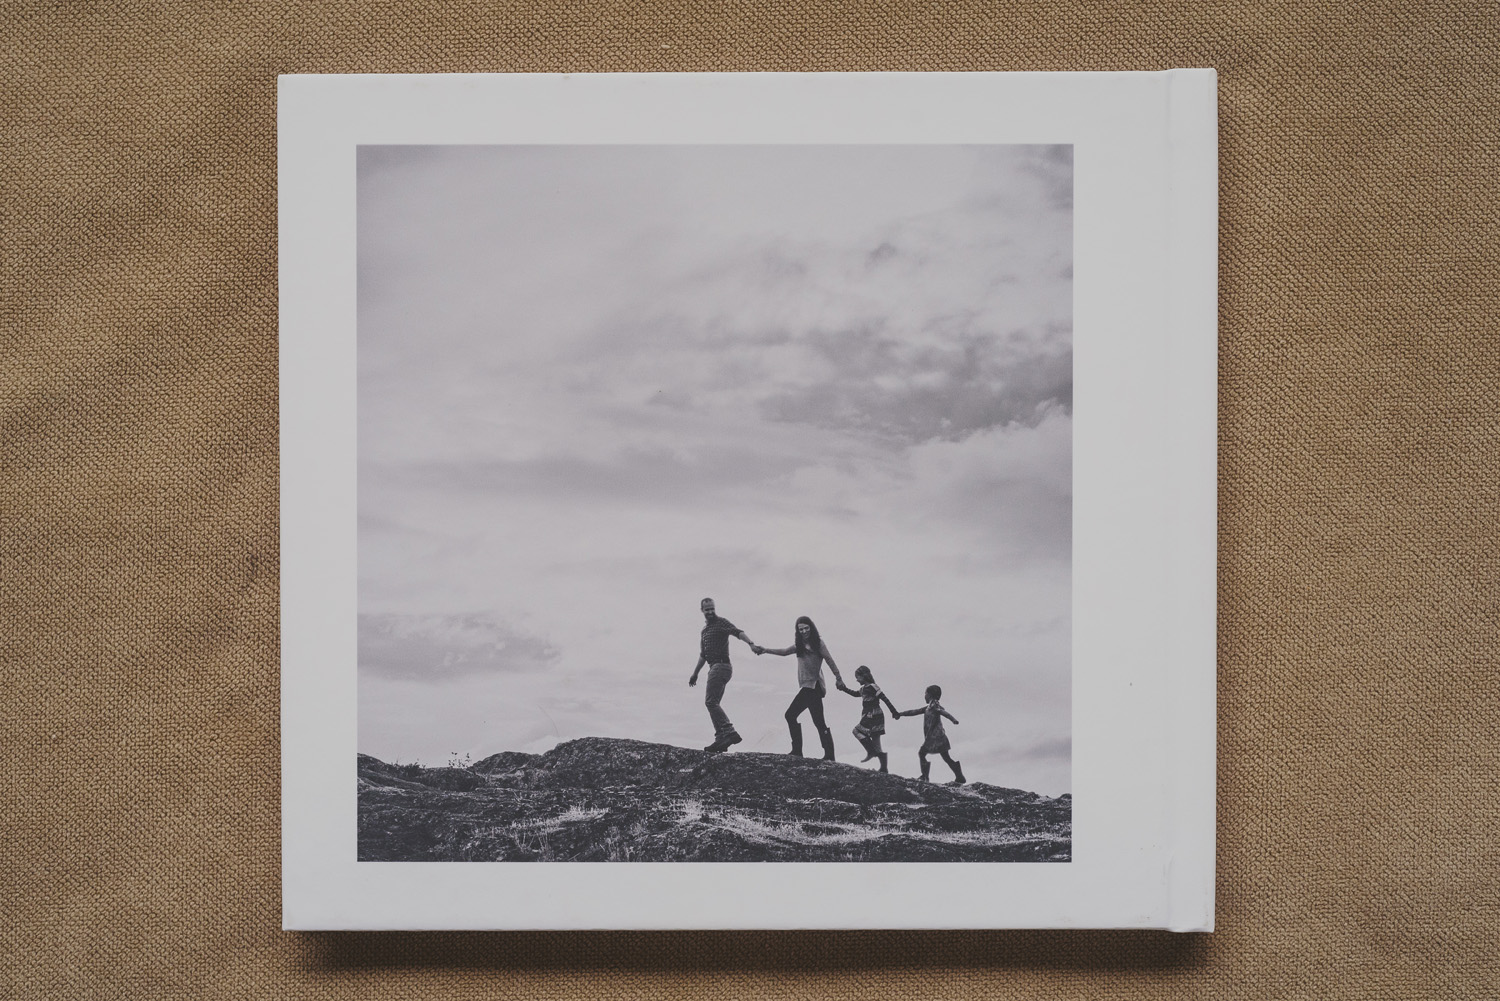 beautiful family photo book-back cover of family walking along rock edge